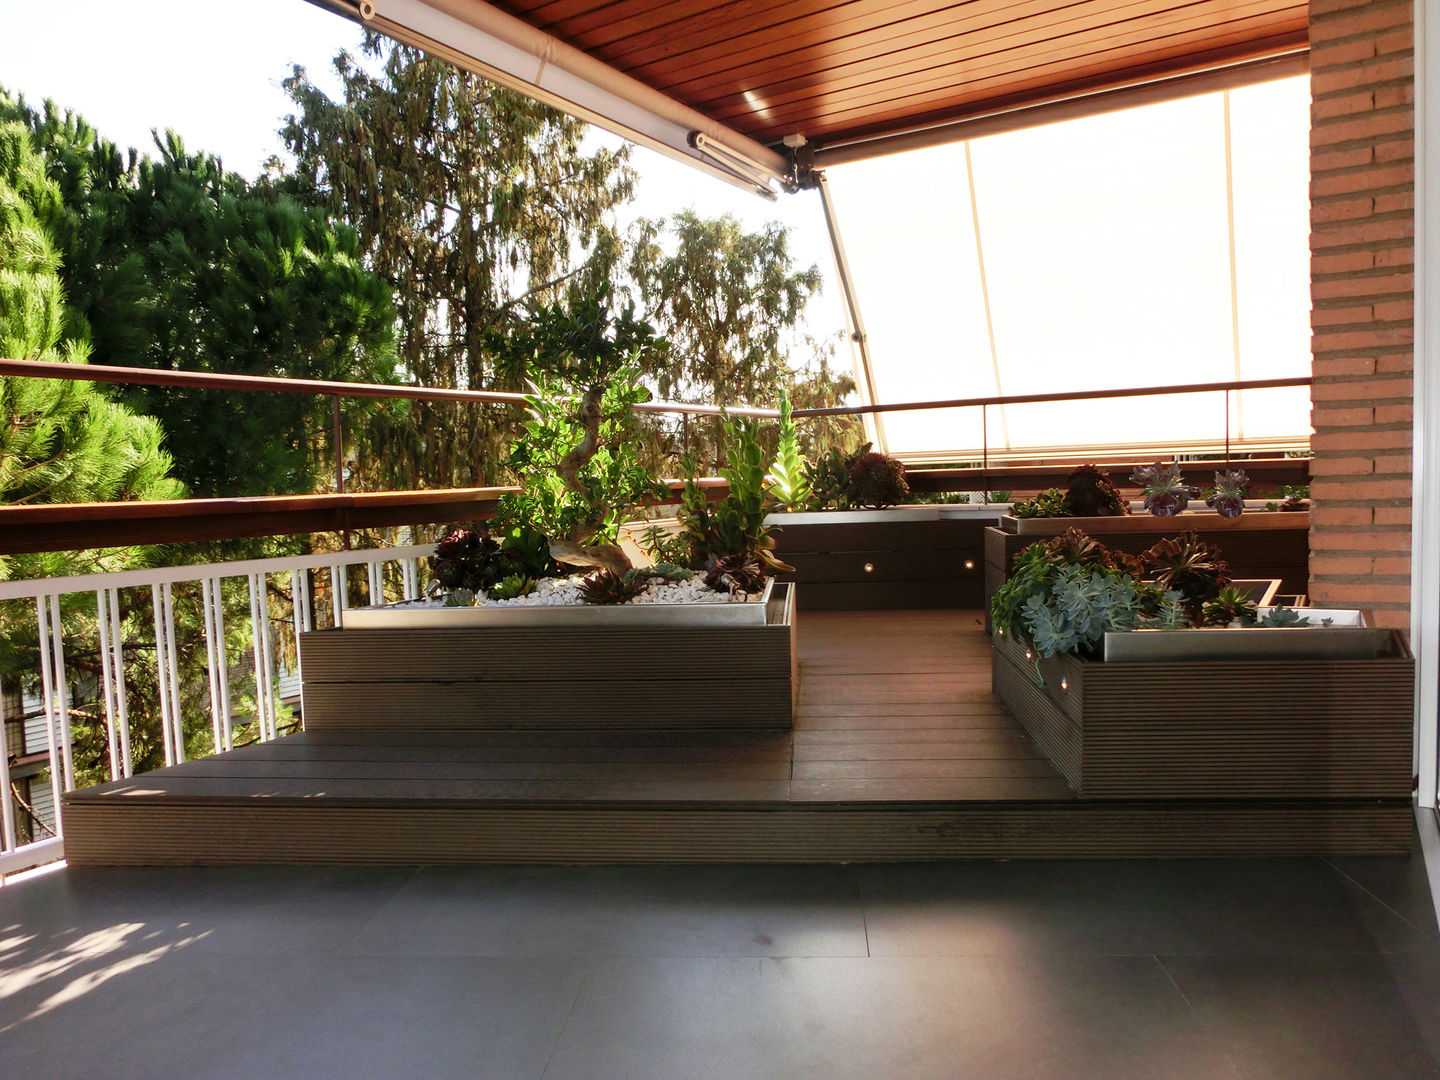 Terrrace Daifuku Designs ระเบียง, นอกชาน terrace,platform,potted plants